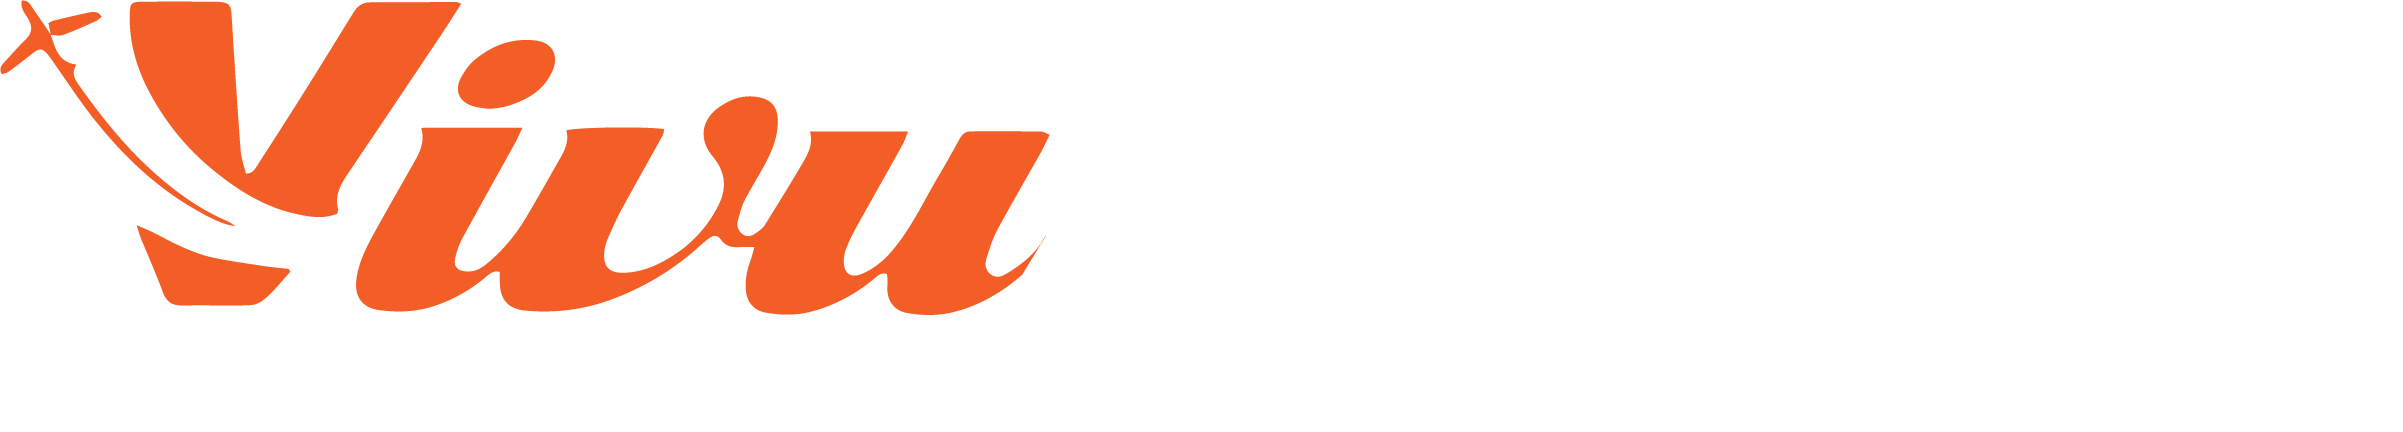 Logo Vivutoday